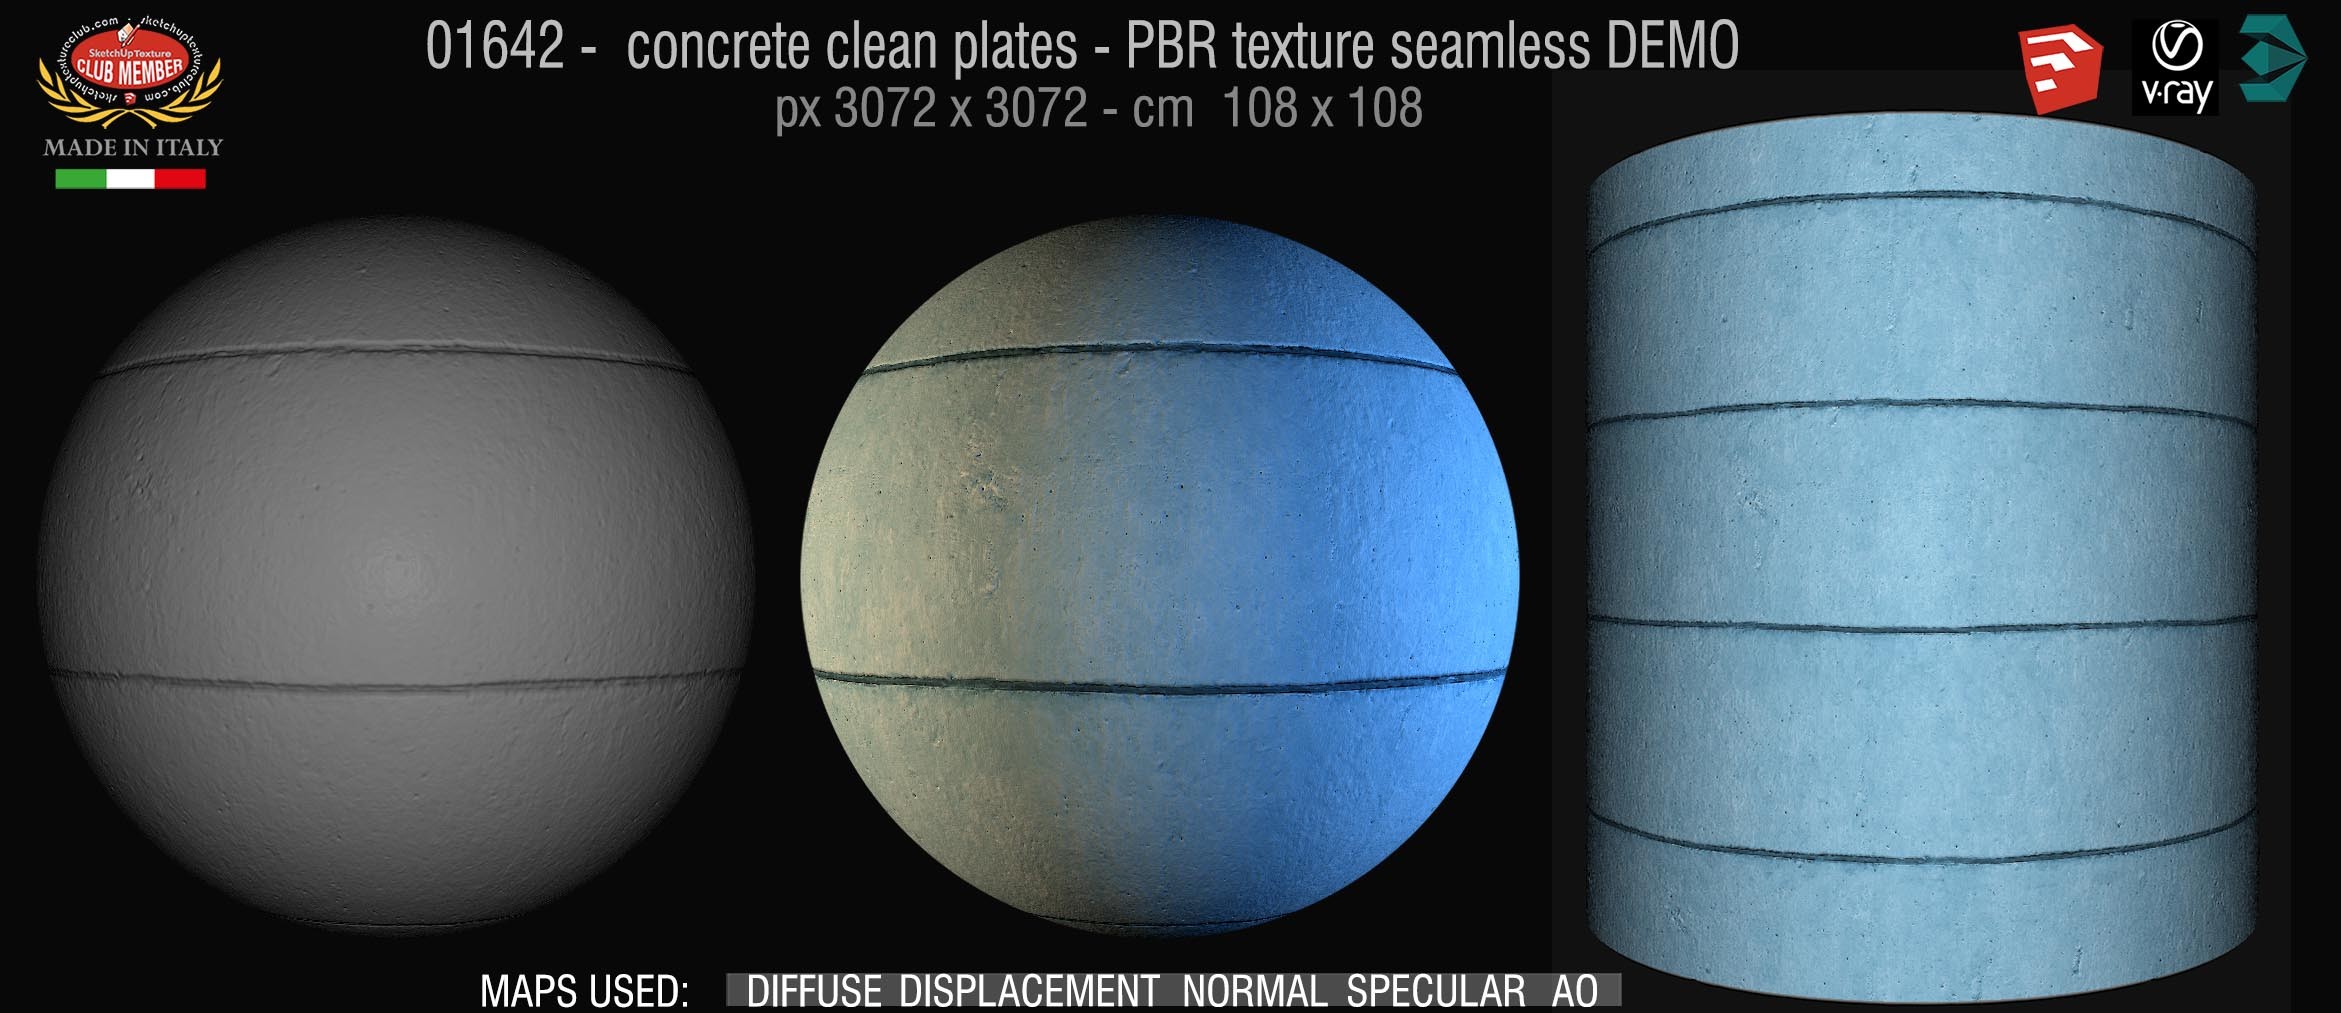 01642 concrete clean plates wall PBR texture seamless DEMO